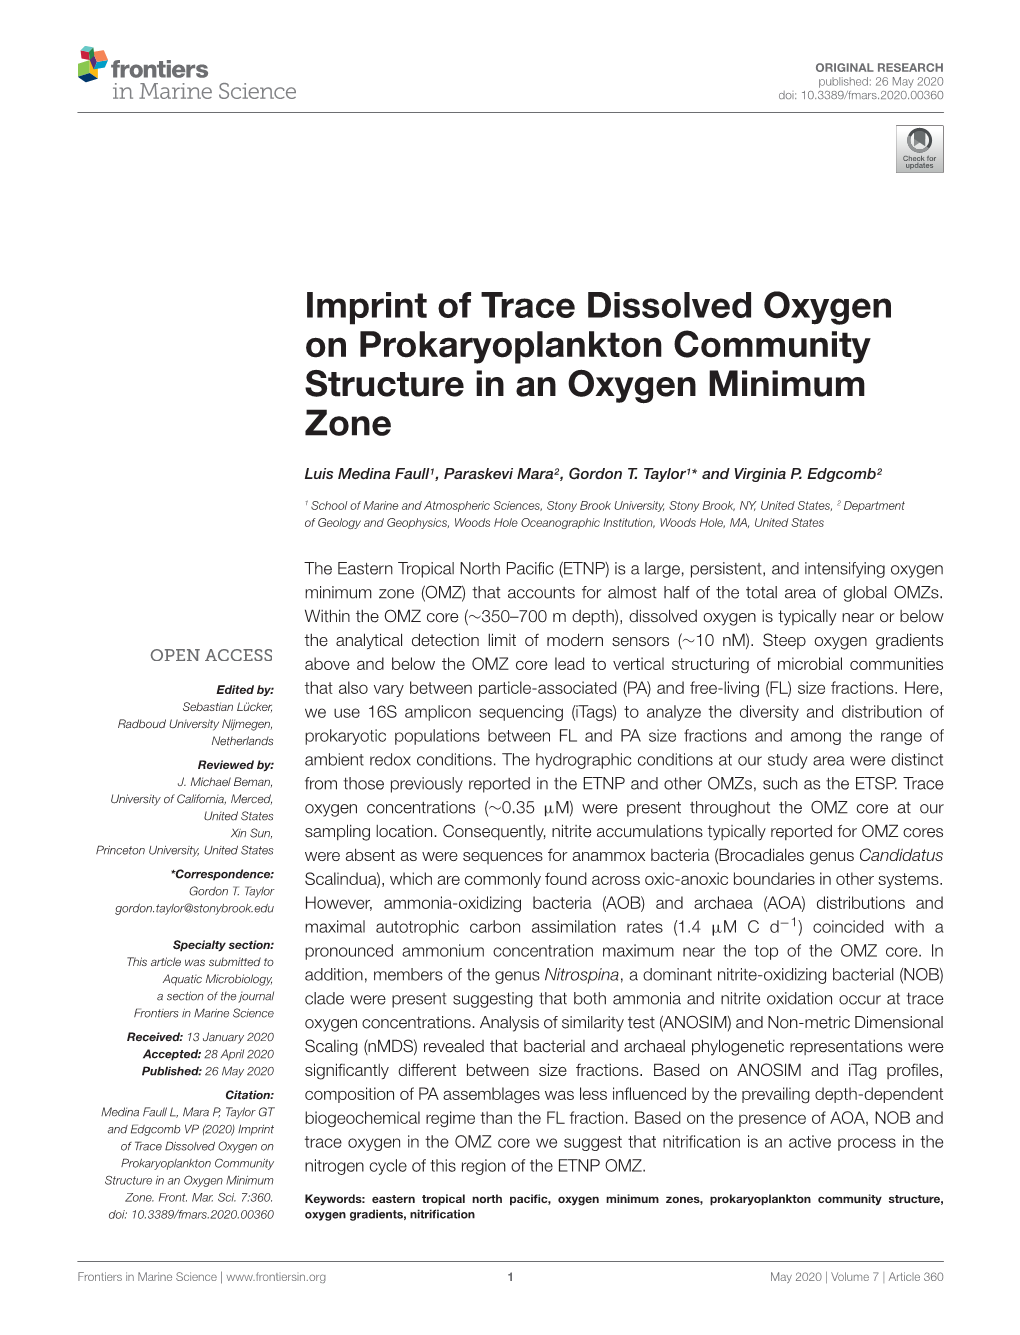 Imprint of Trace Dissolved Oxygen on Prokaryoplankton Community Structure in an Oxygen Minimum Zone